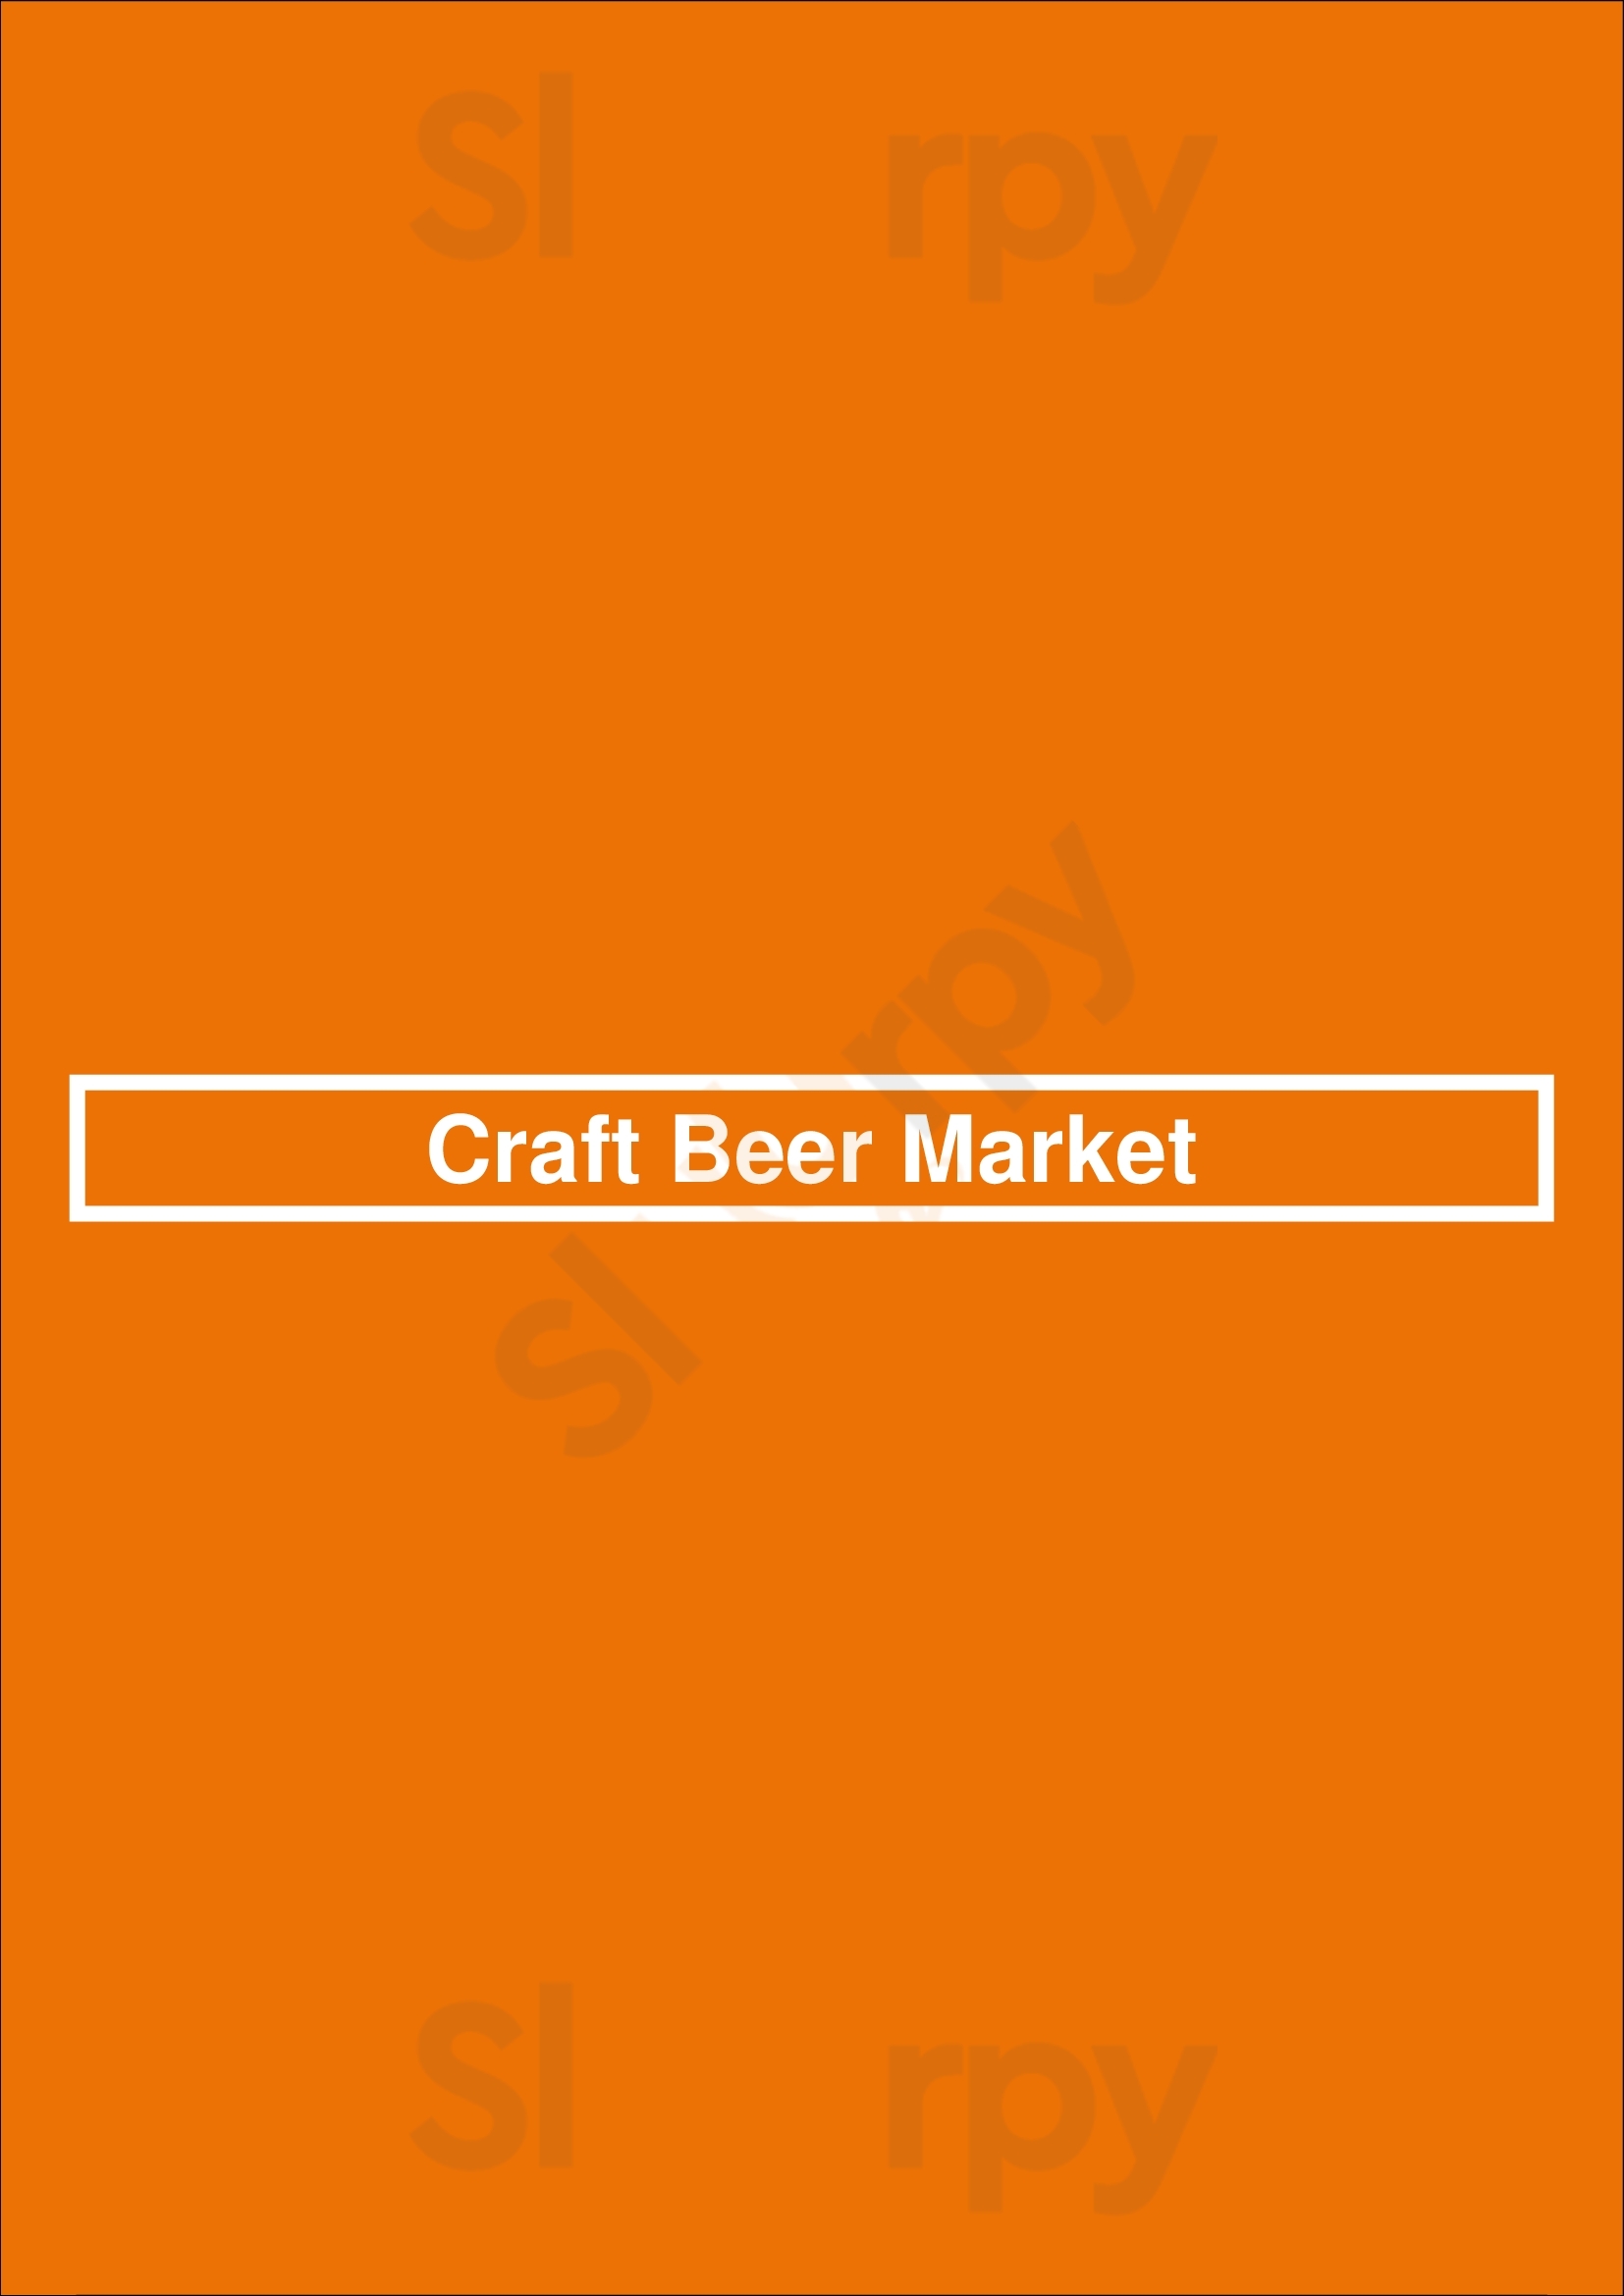 Craft Beer Market- Downtown Calgary Calgary Menu - 1